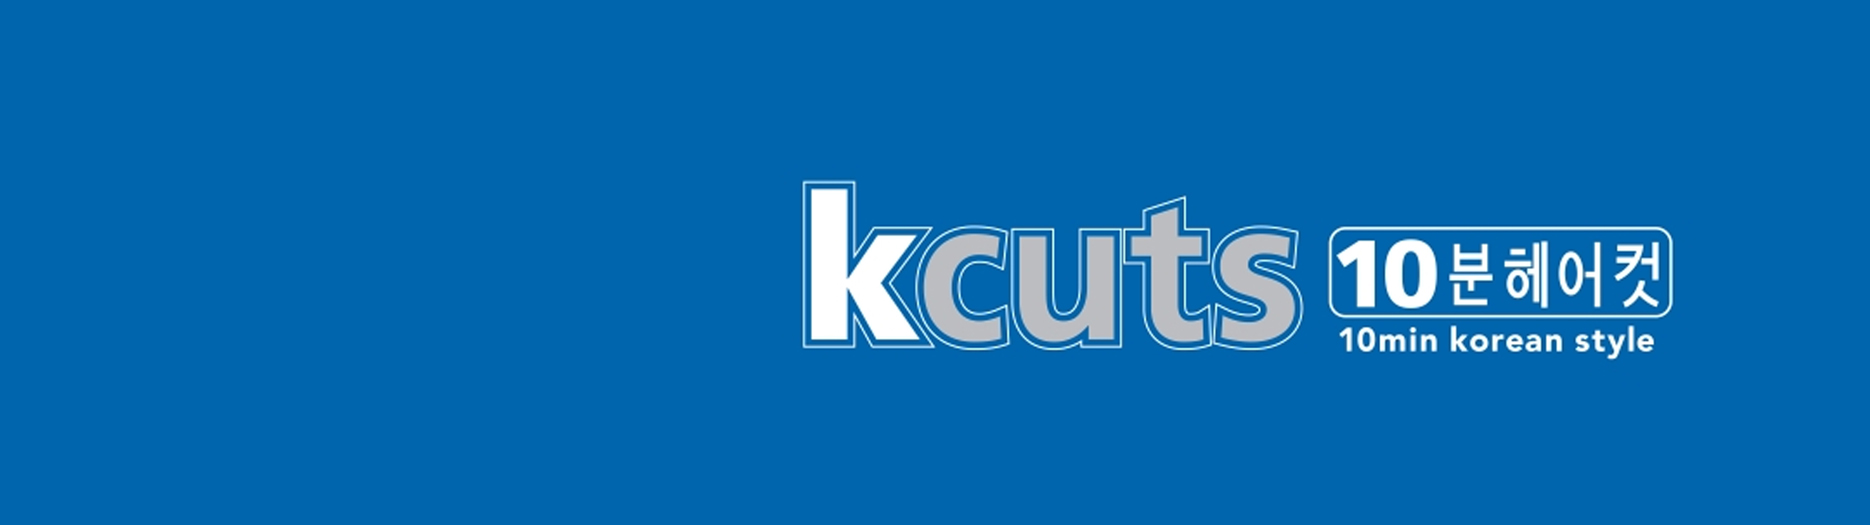 kcuts-Banner